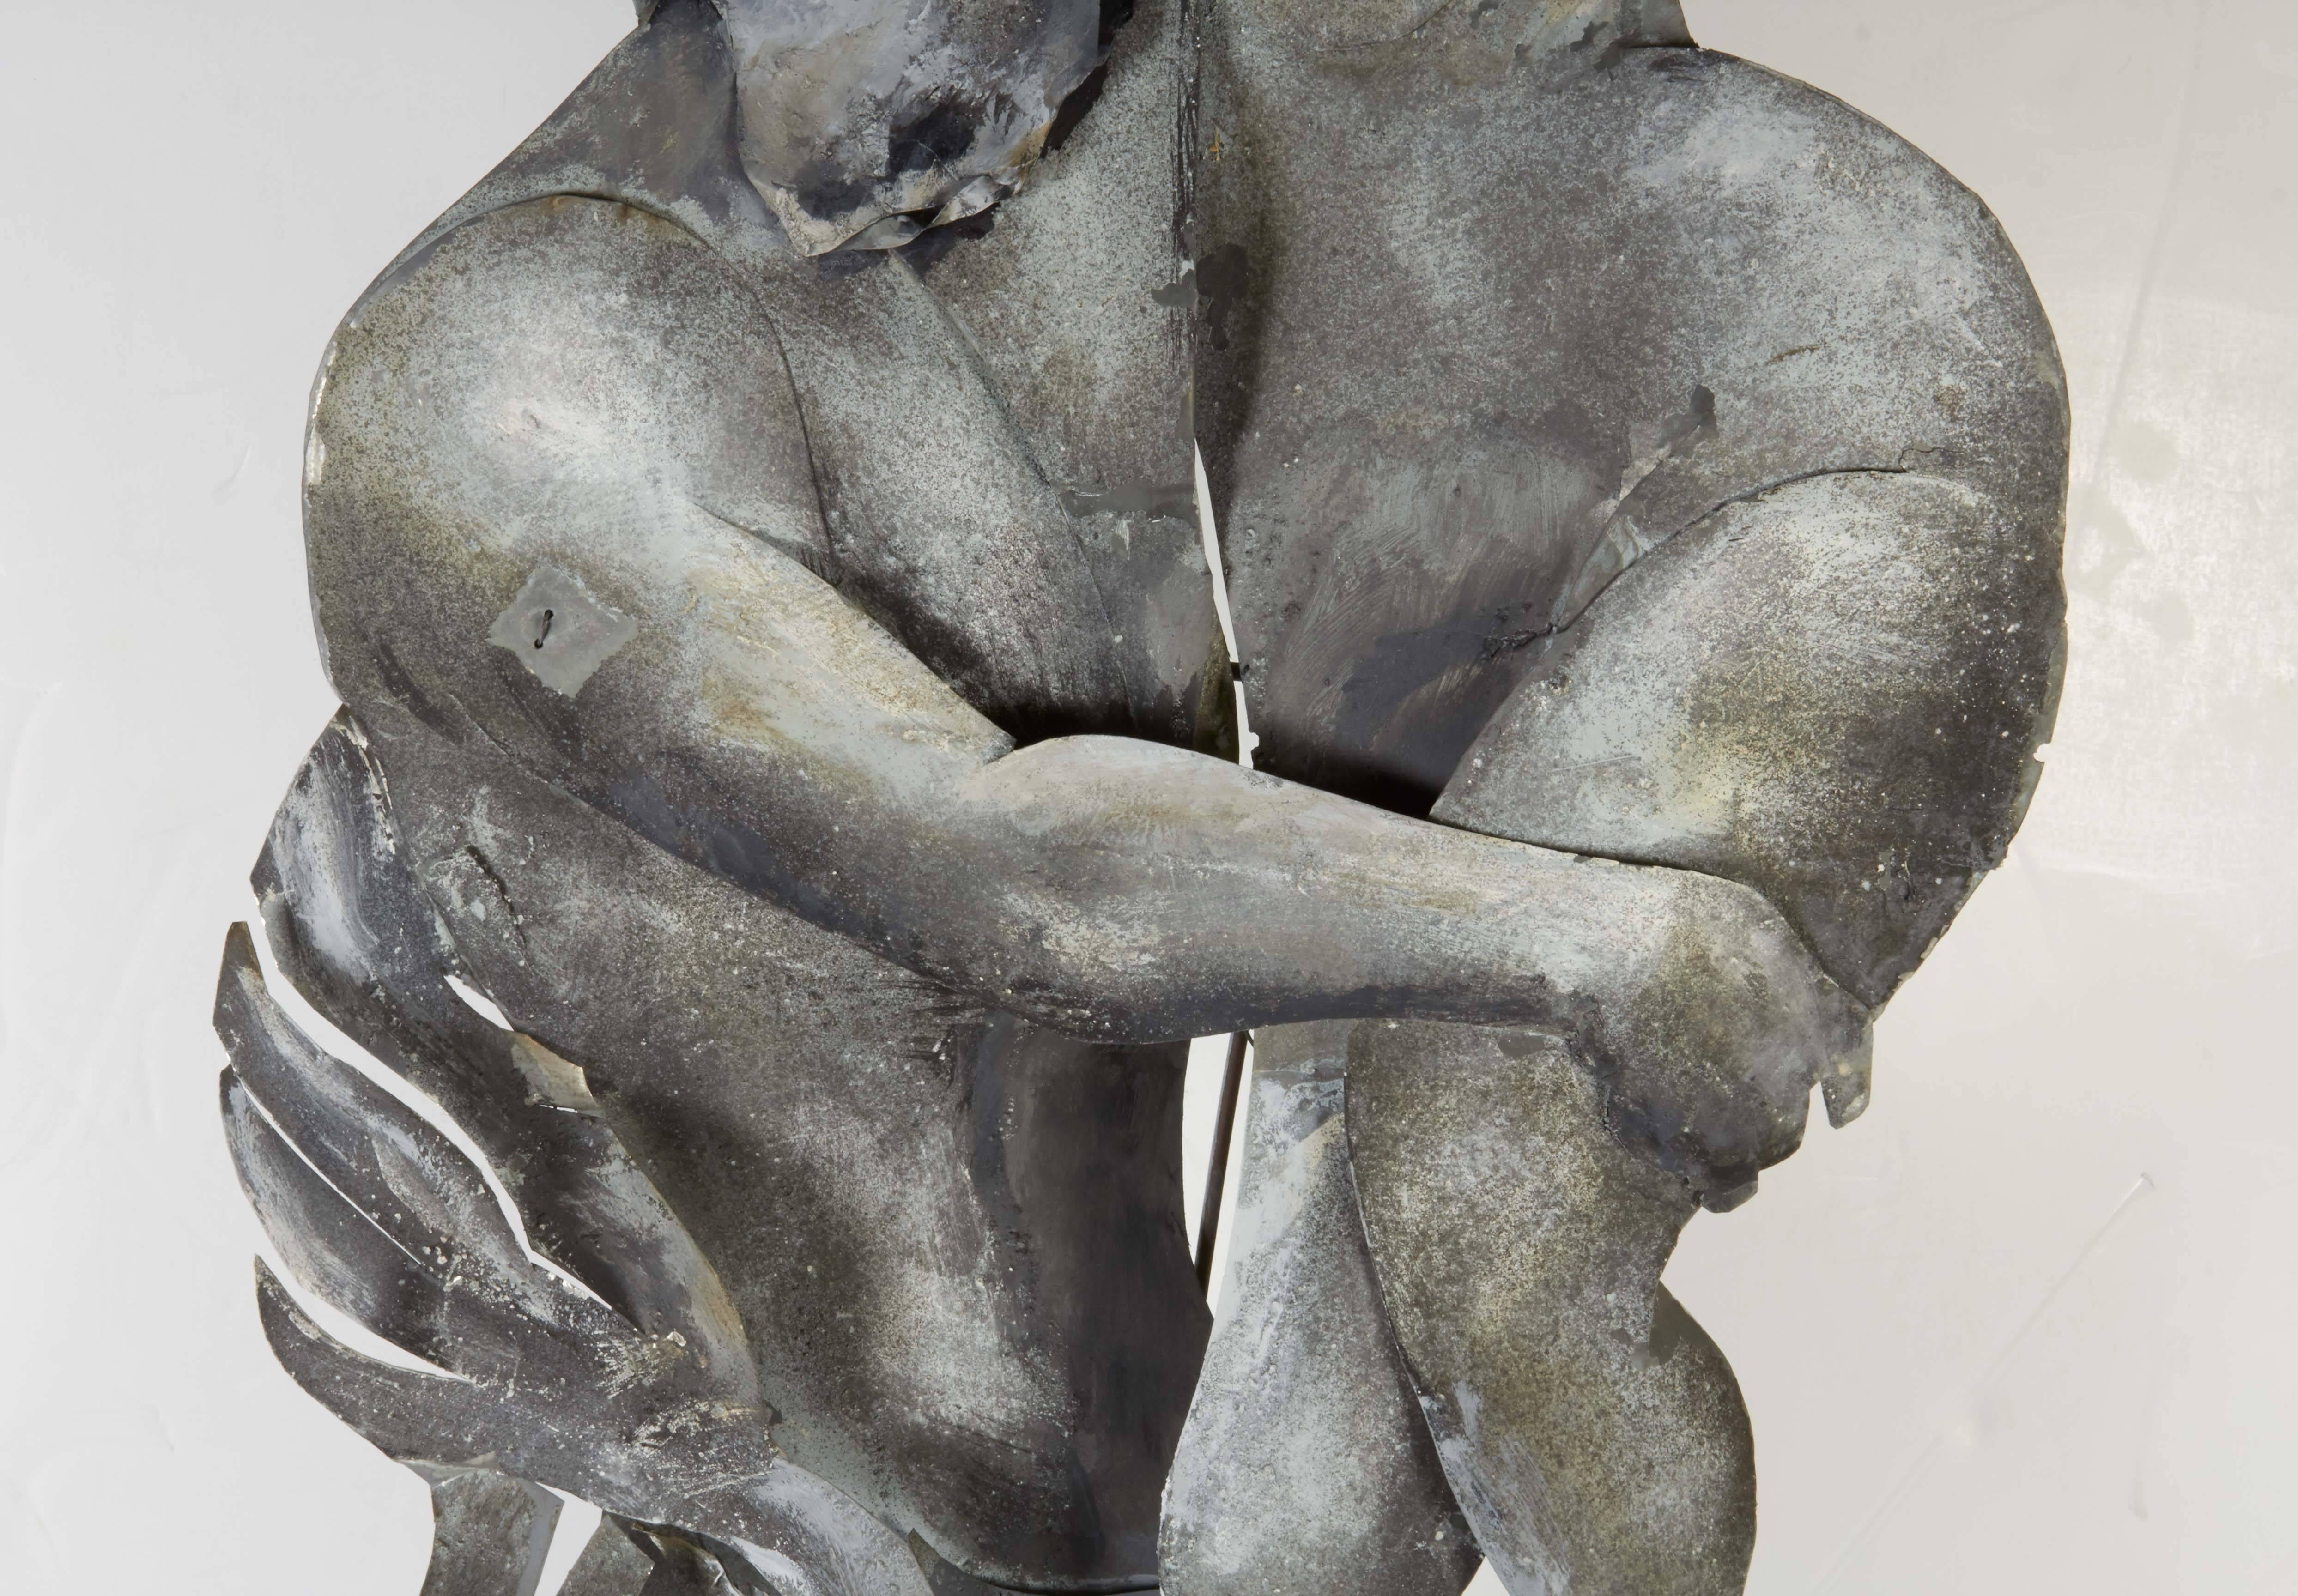 20th Century Modernist Sculpture of the Minotaur Abducting a Maiden